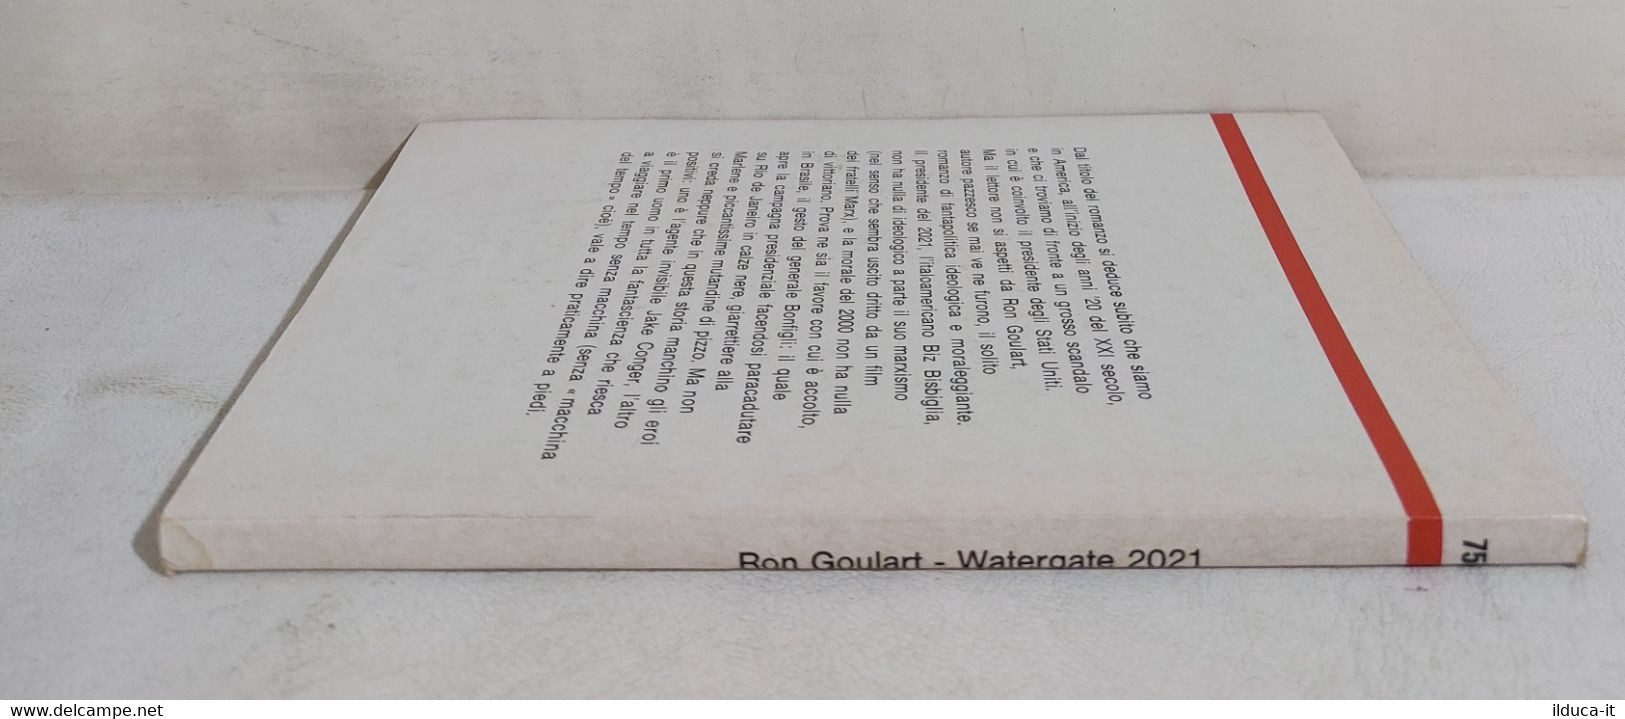 I111753 Urania N. 753 - Ron Goulart - Watergate 2021 - Mondadori 1978 - Science Fiction Et Fantaisie